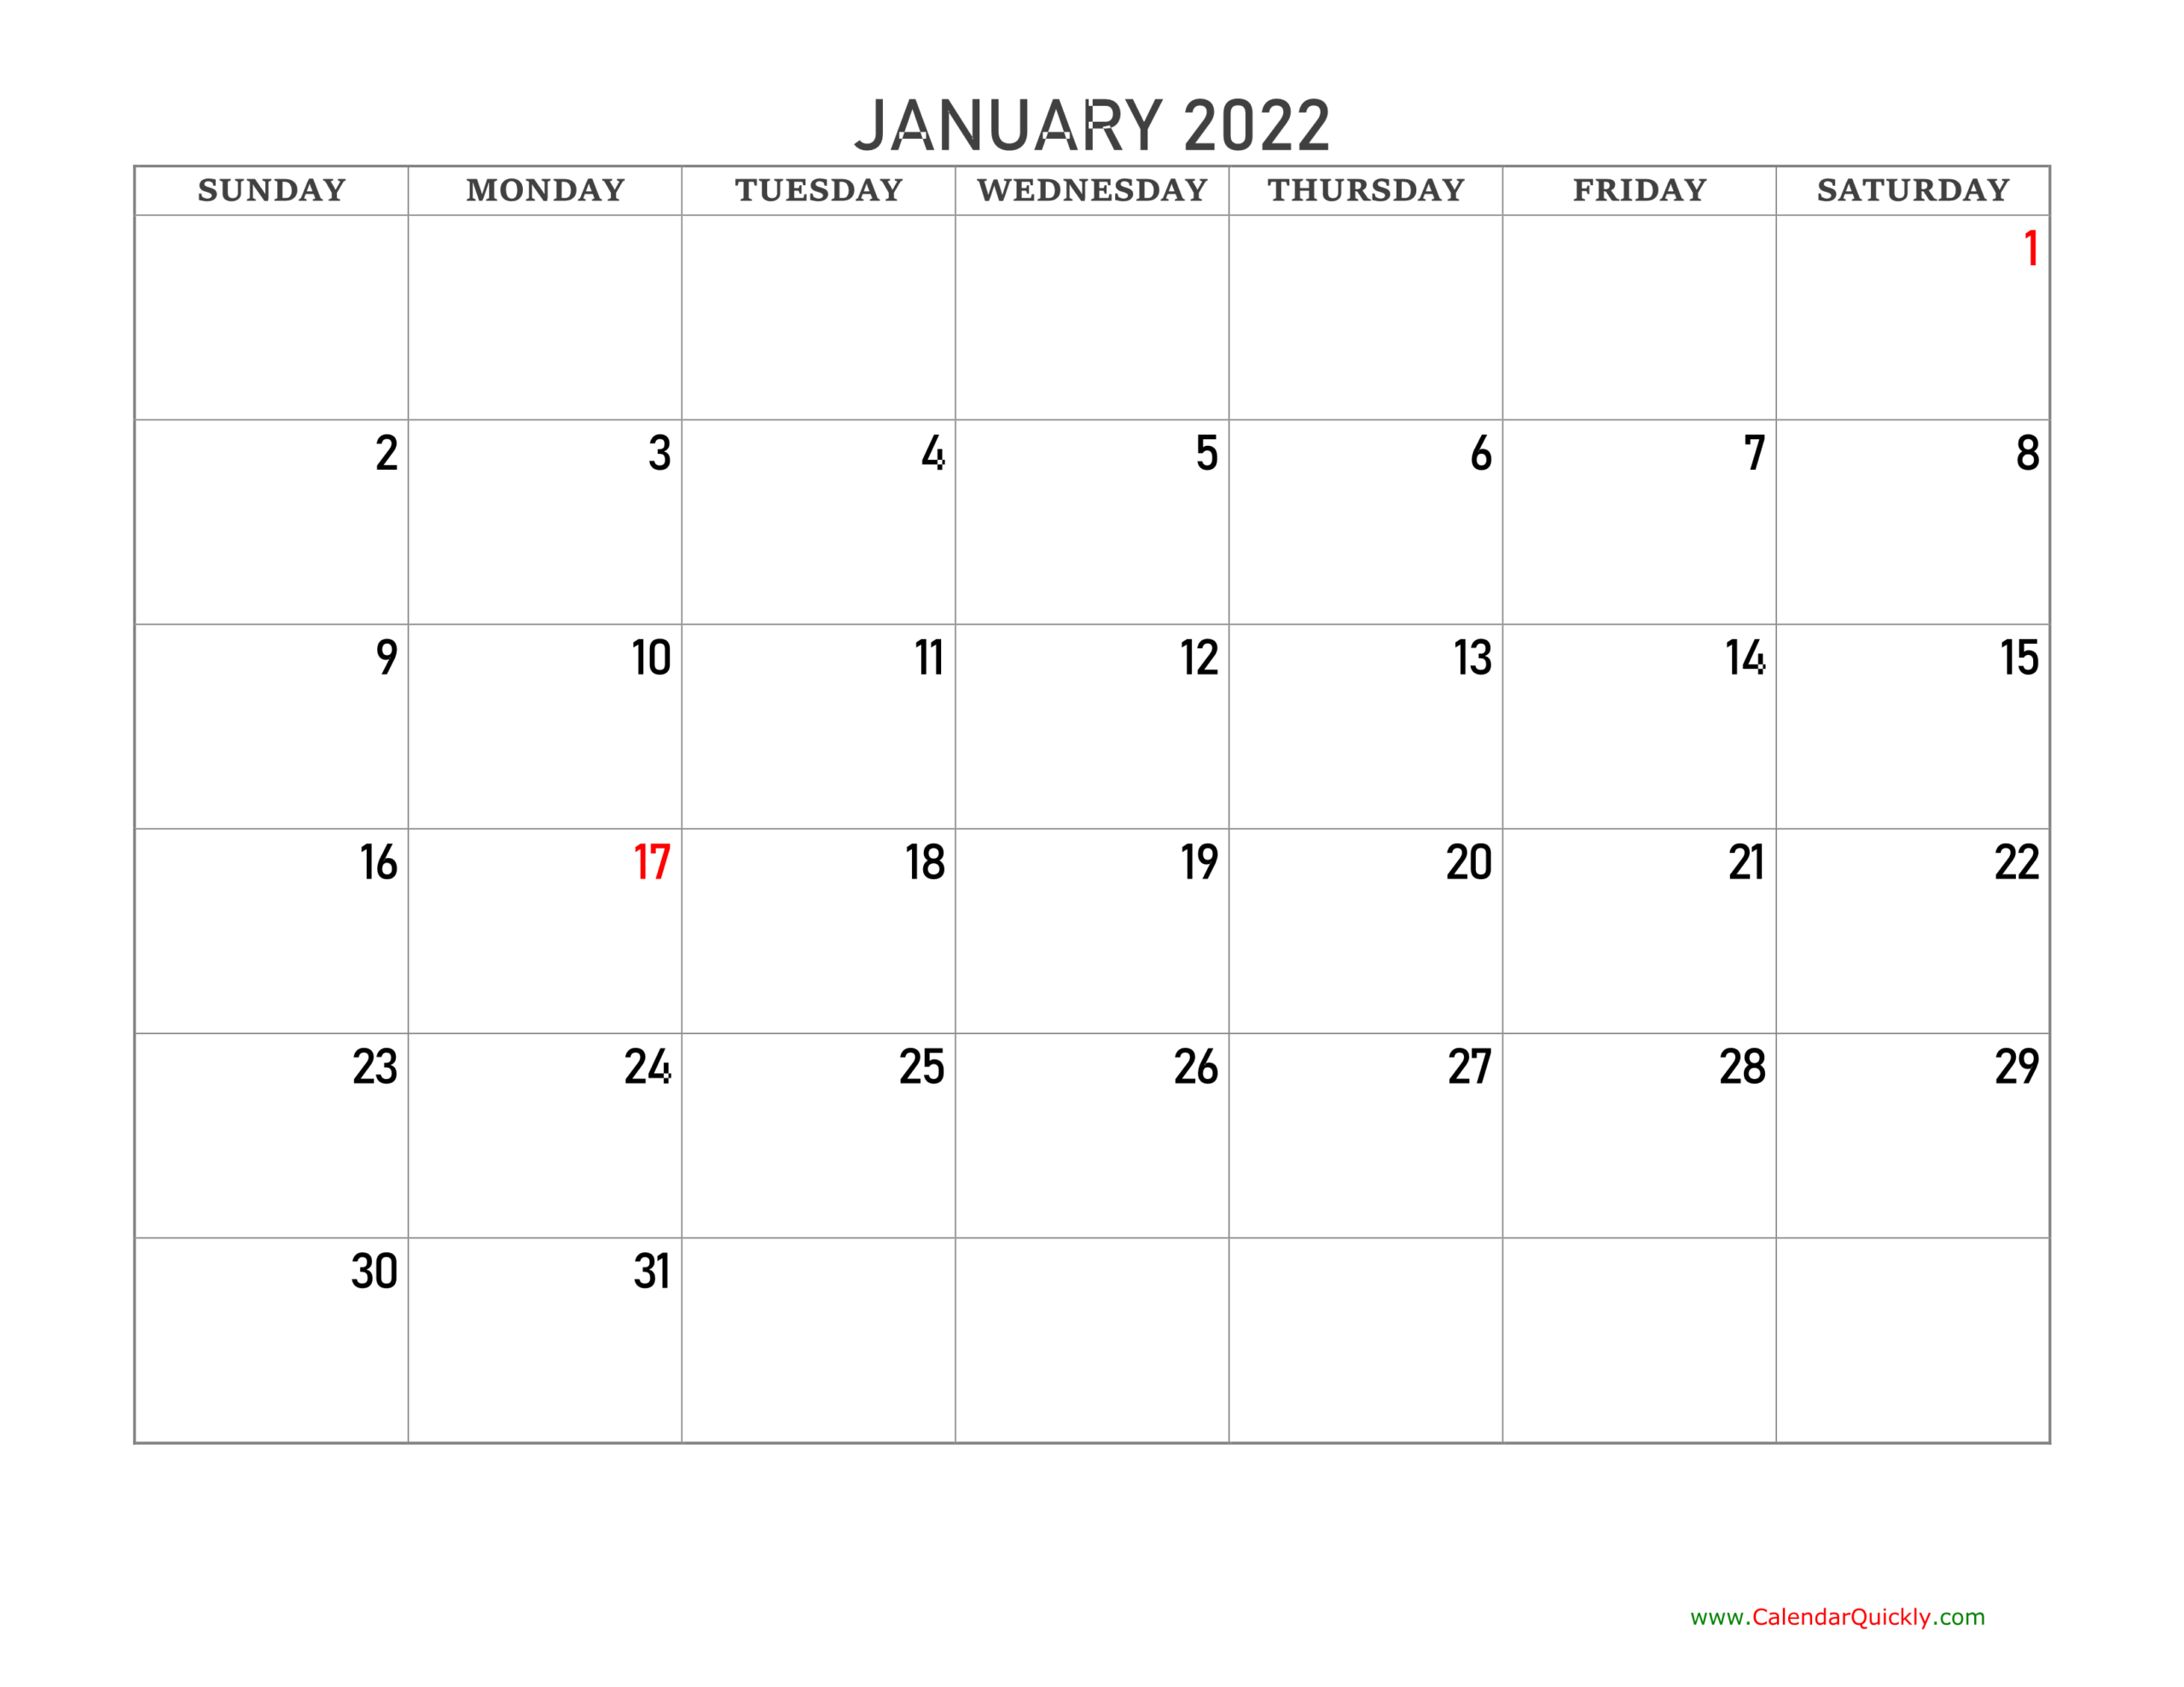 Monthly 2022 Blank Calendar | Calendar Quickly  Word Calendar For 2022